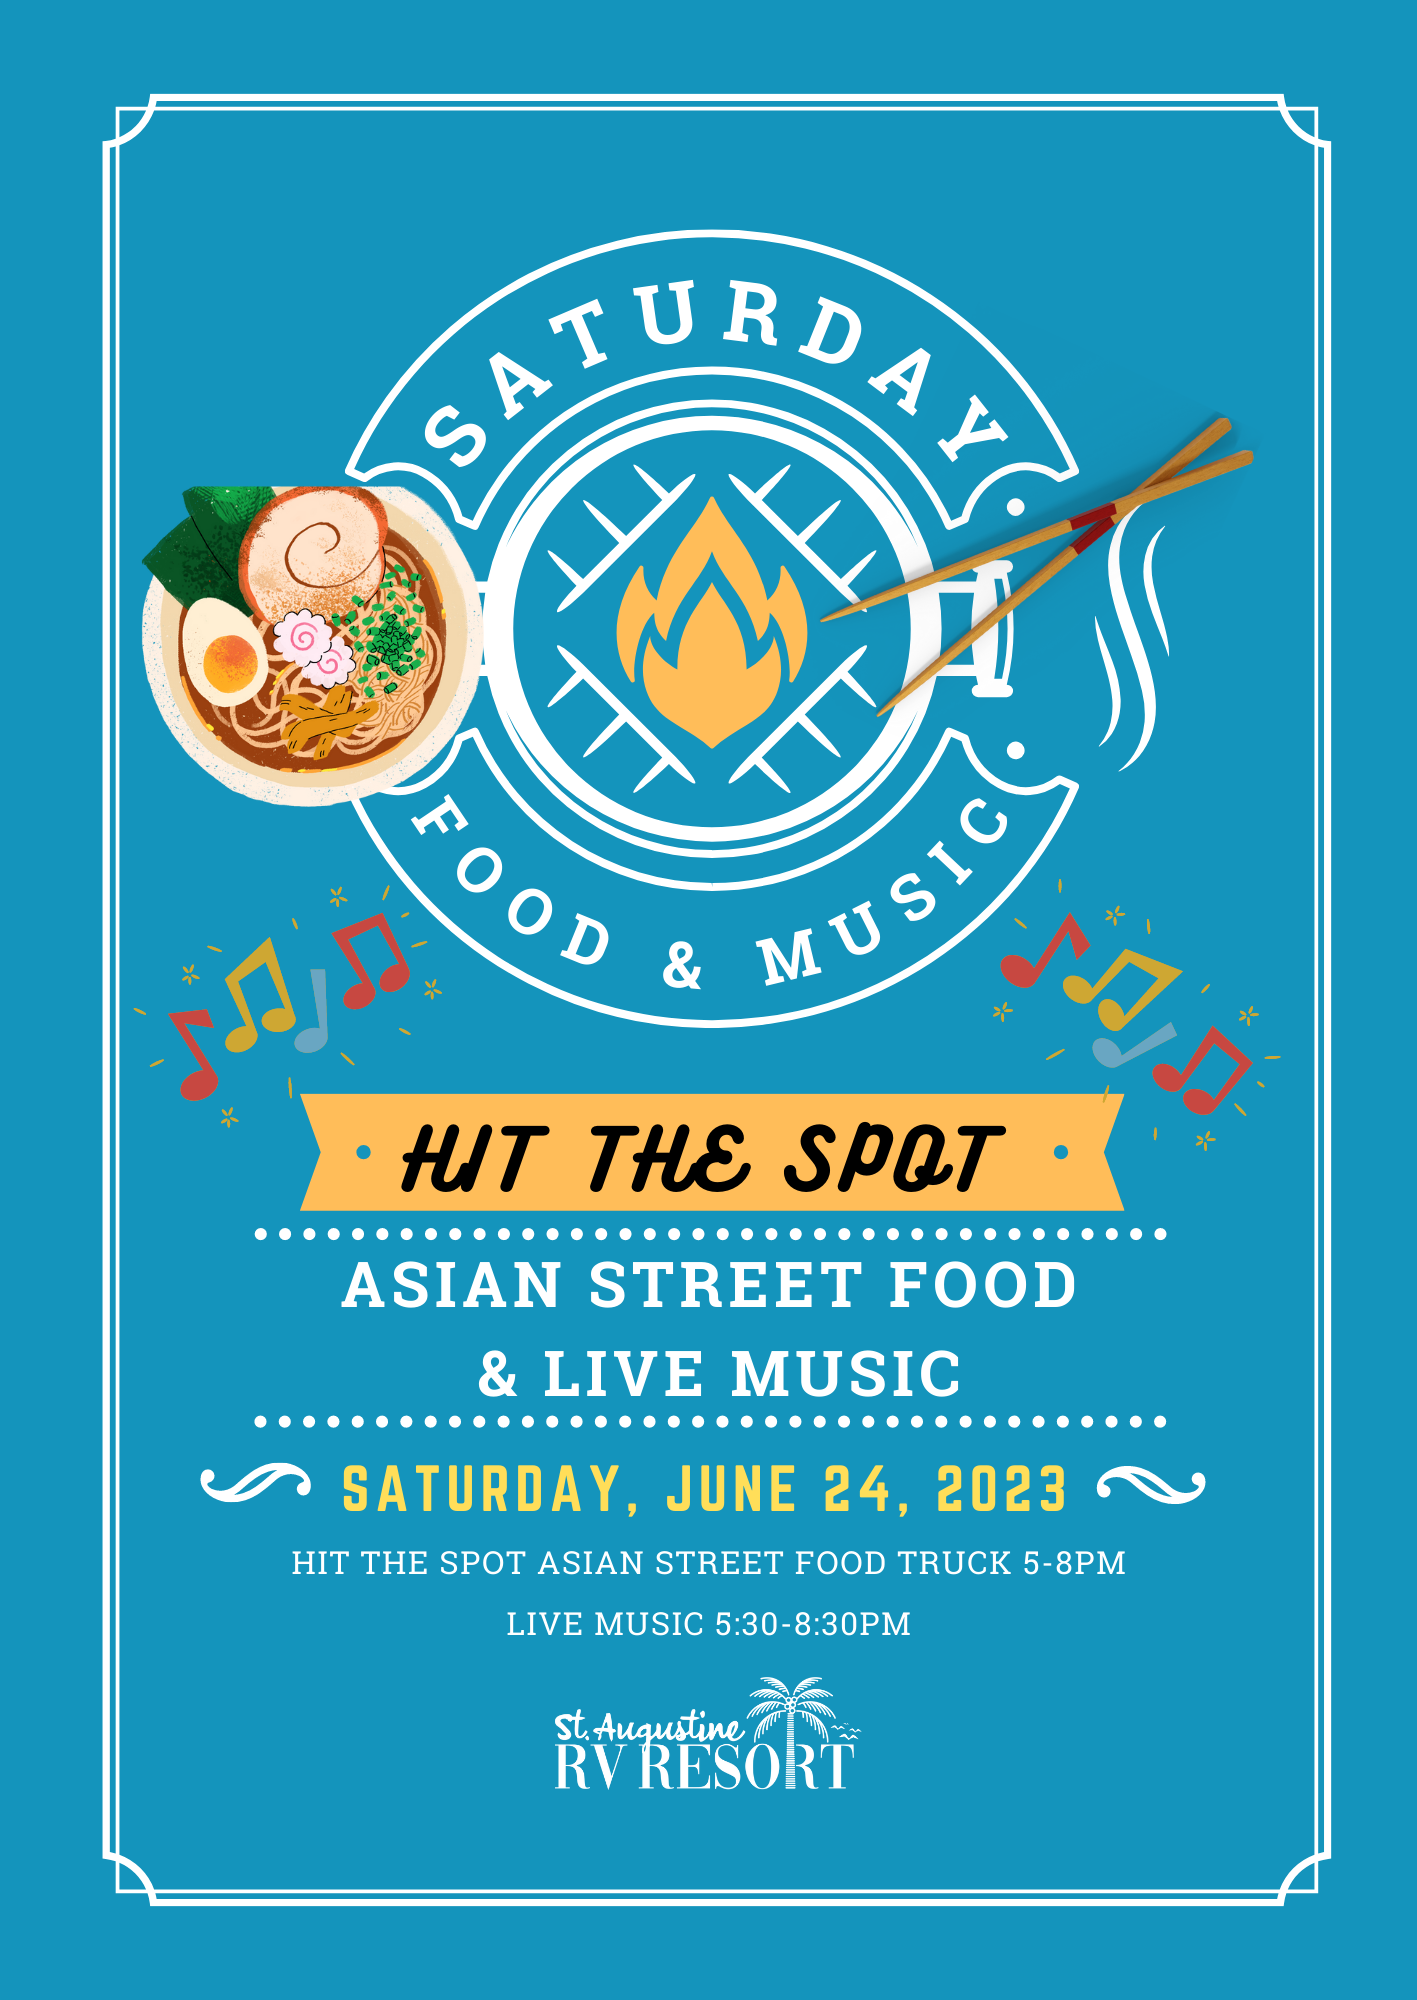 Food truck & live music Saturday 6/24!